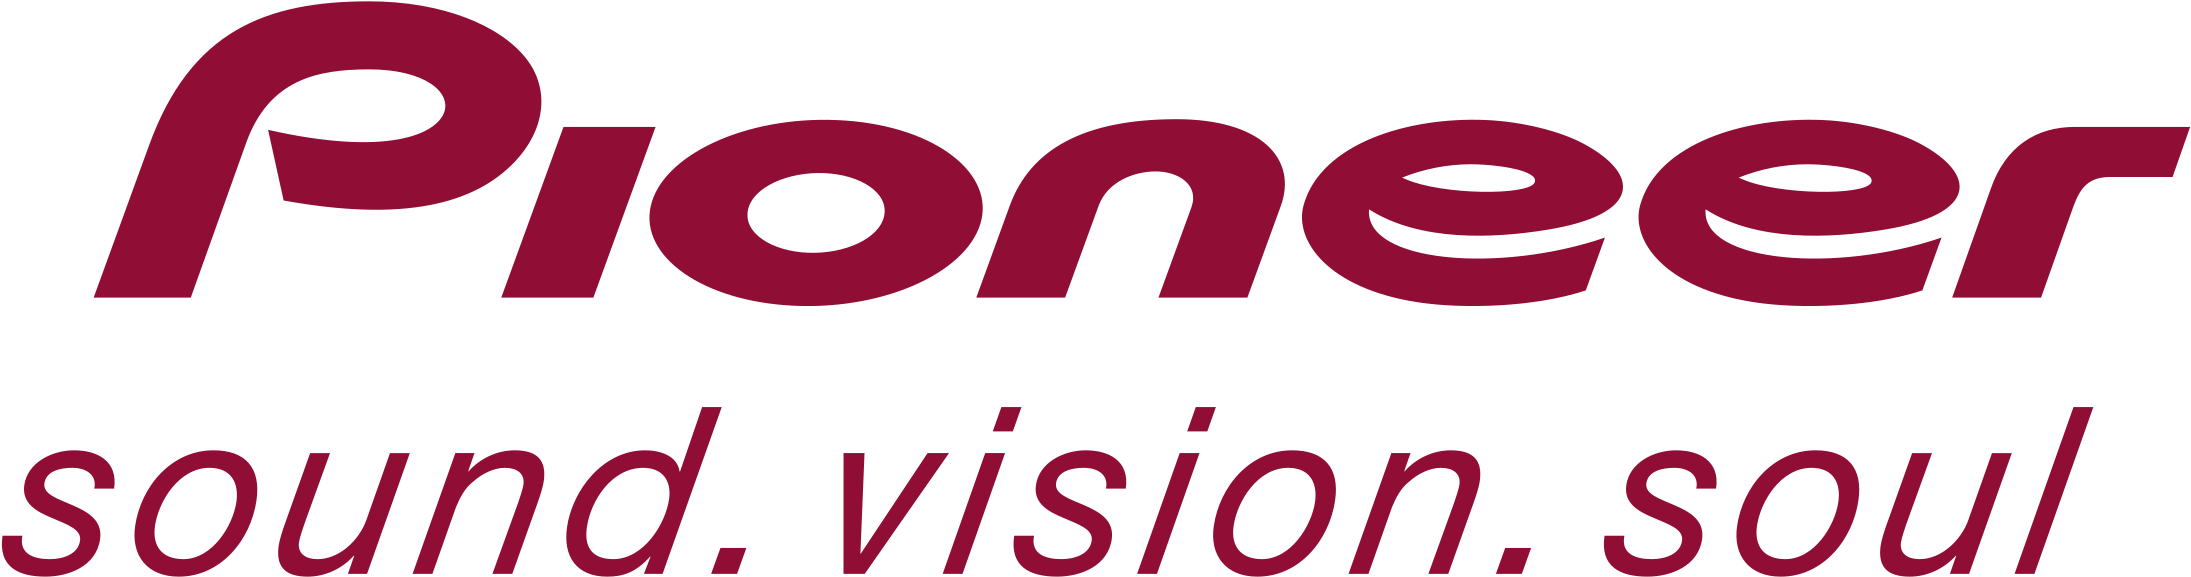 Download Pioneer Logo Png Transparent   Pioneer Logo   Full Size Pluspng.com  - Pioneer, Transparent background PNG HD thumbnail